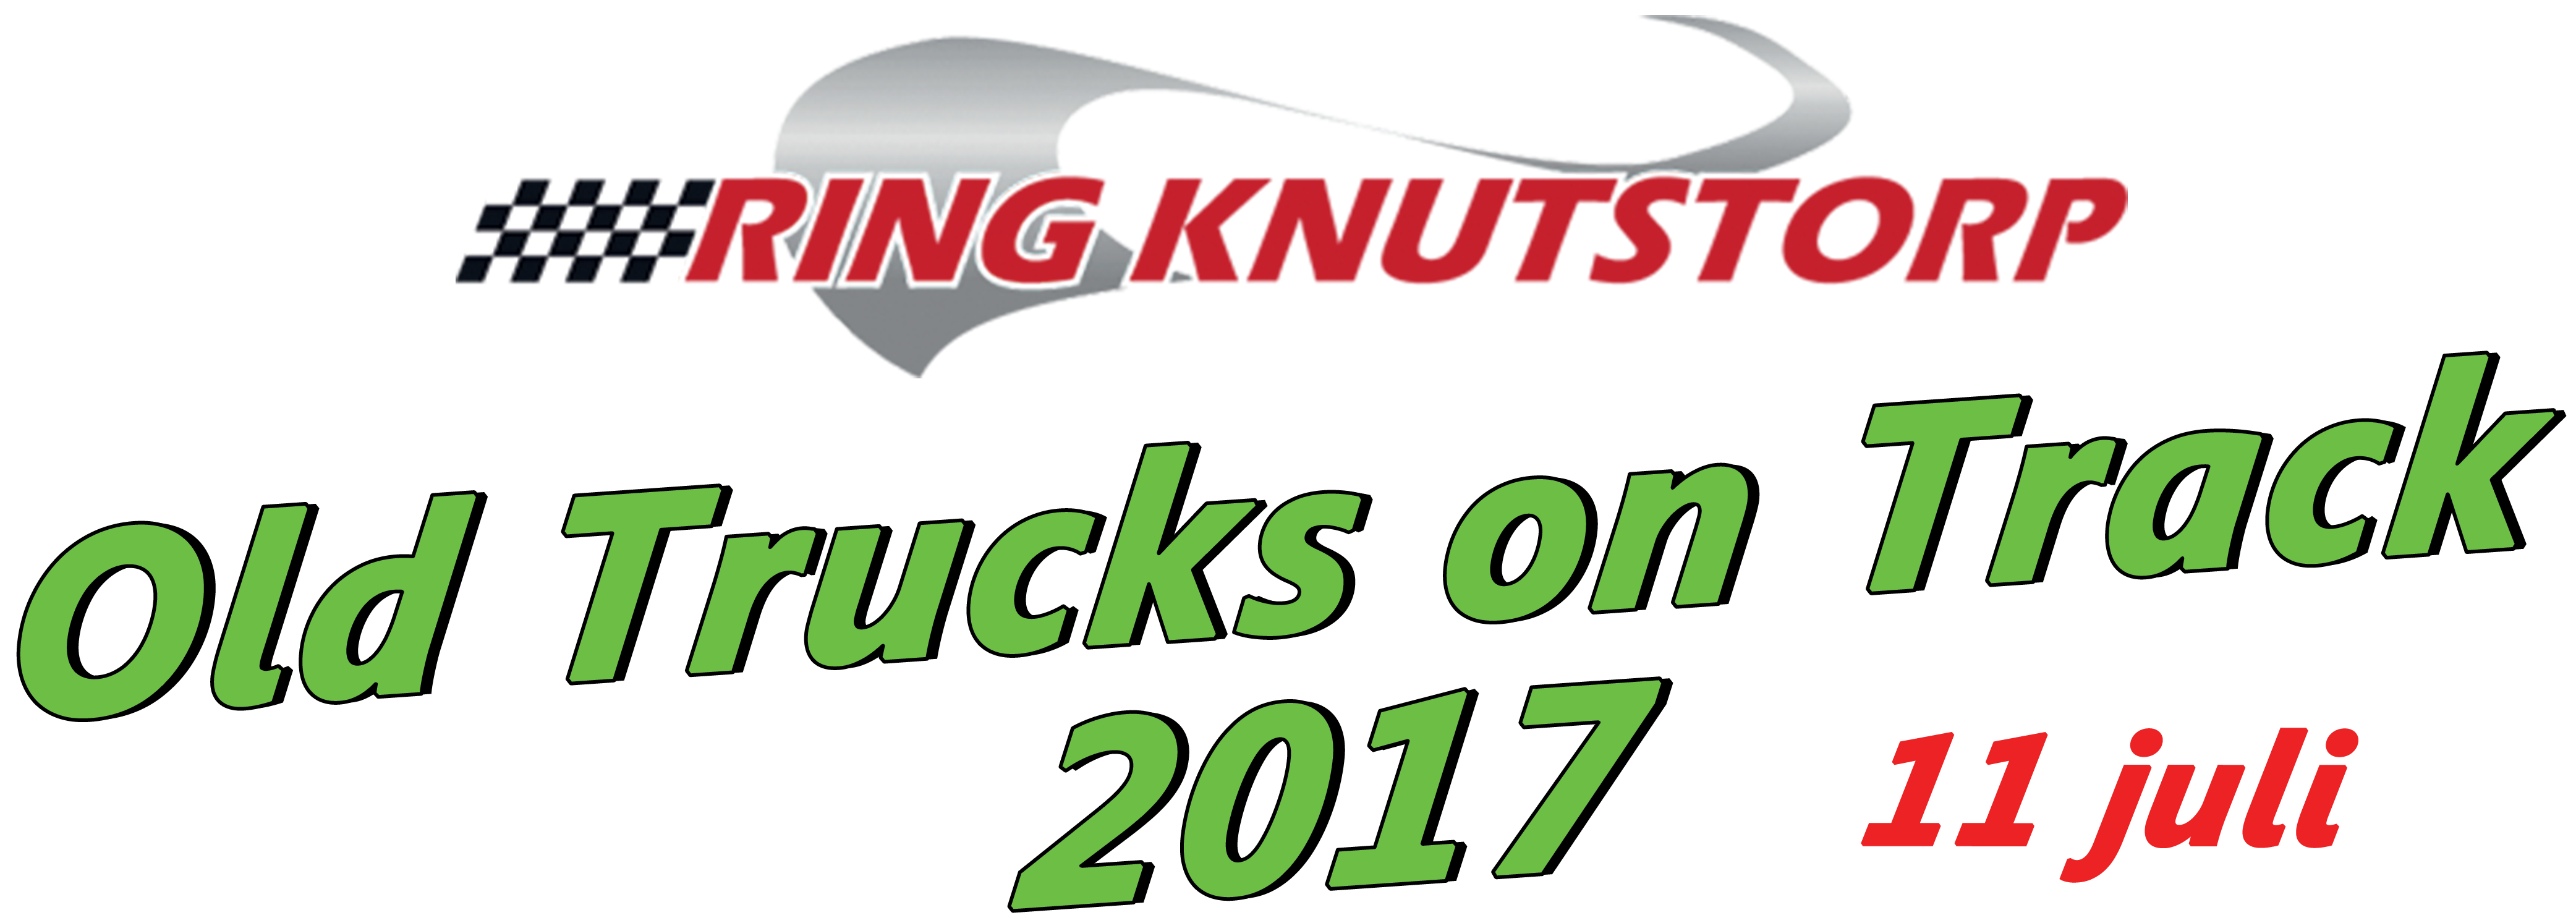 old-trucks-on-track-2017-11-julipng